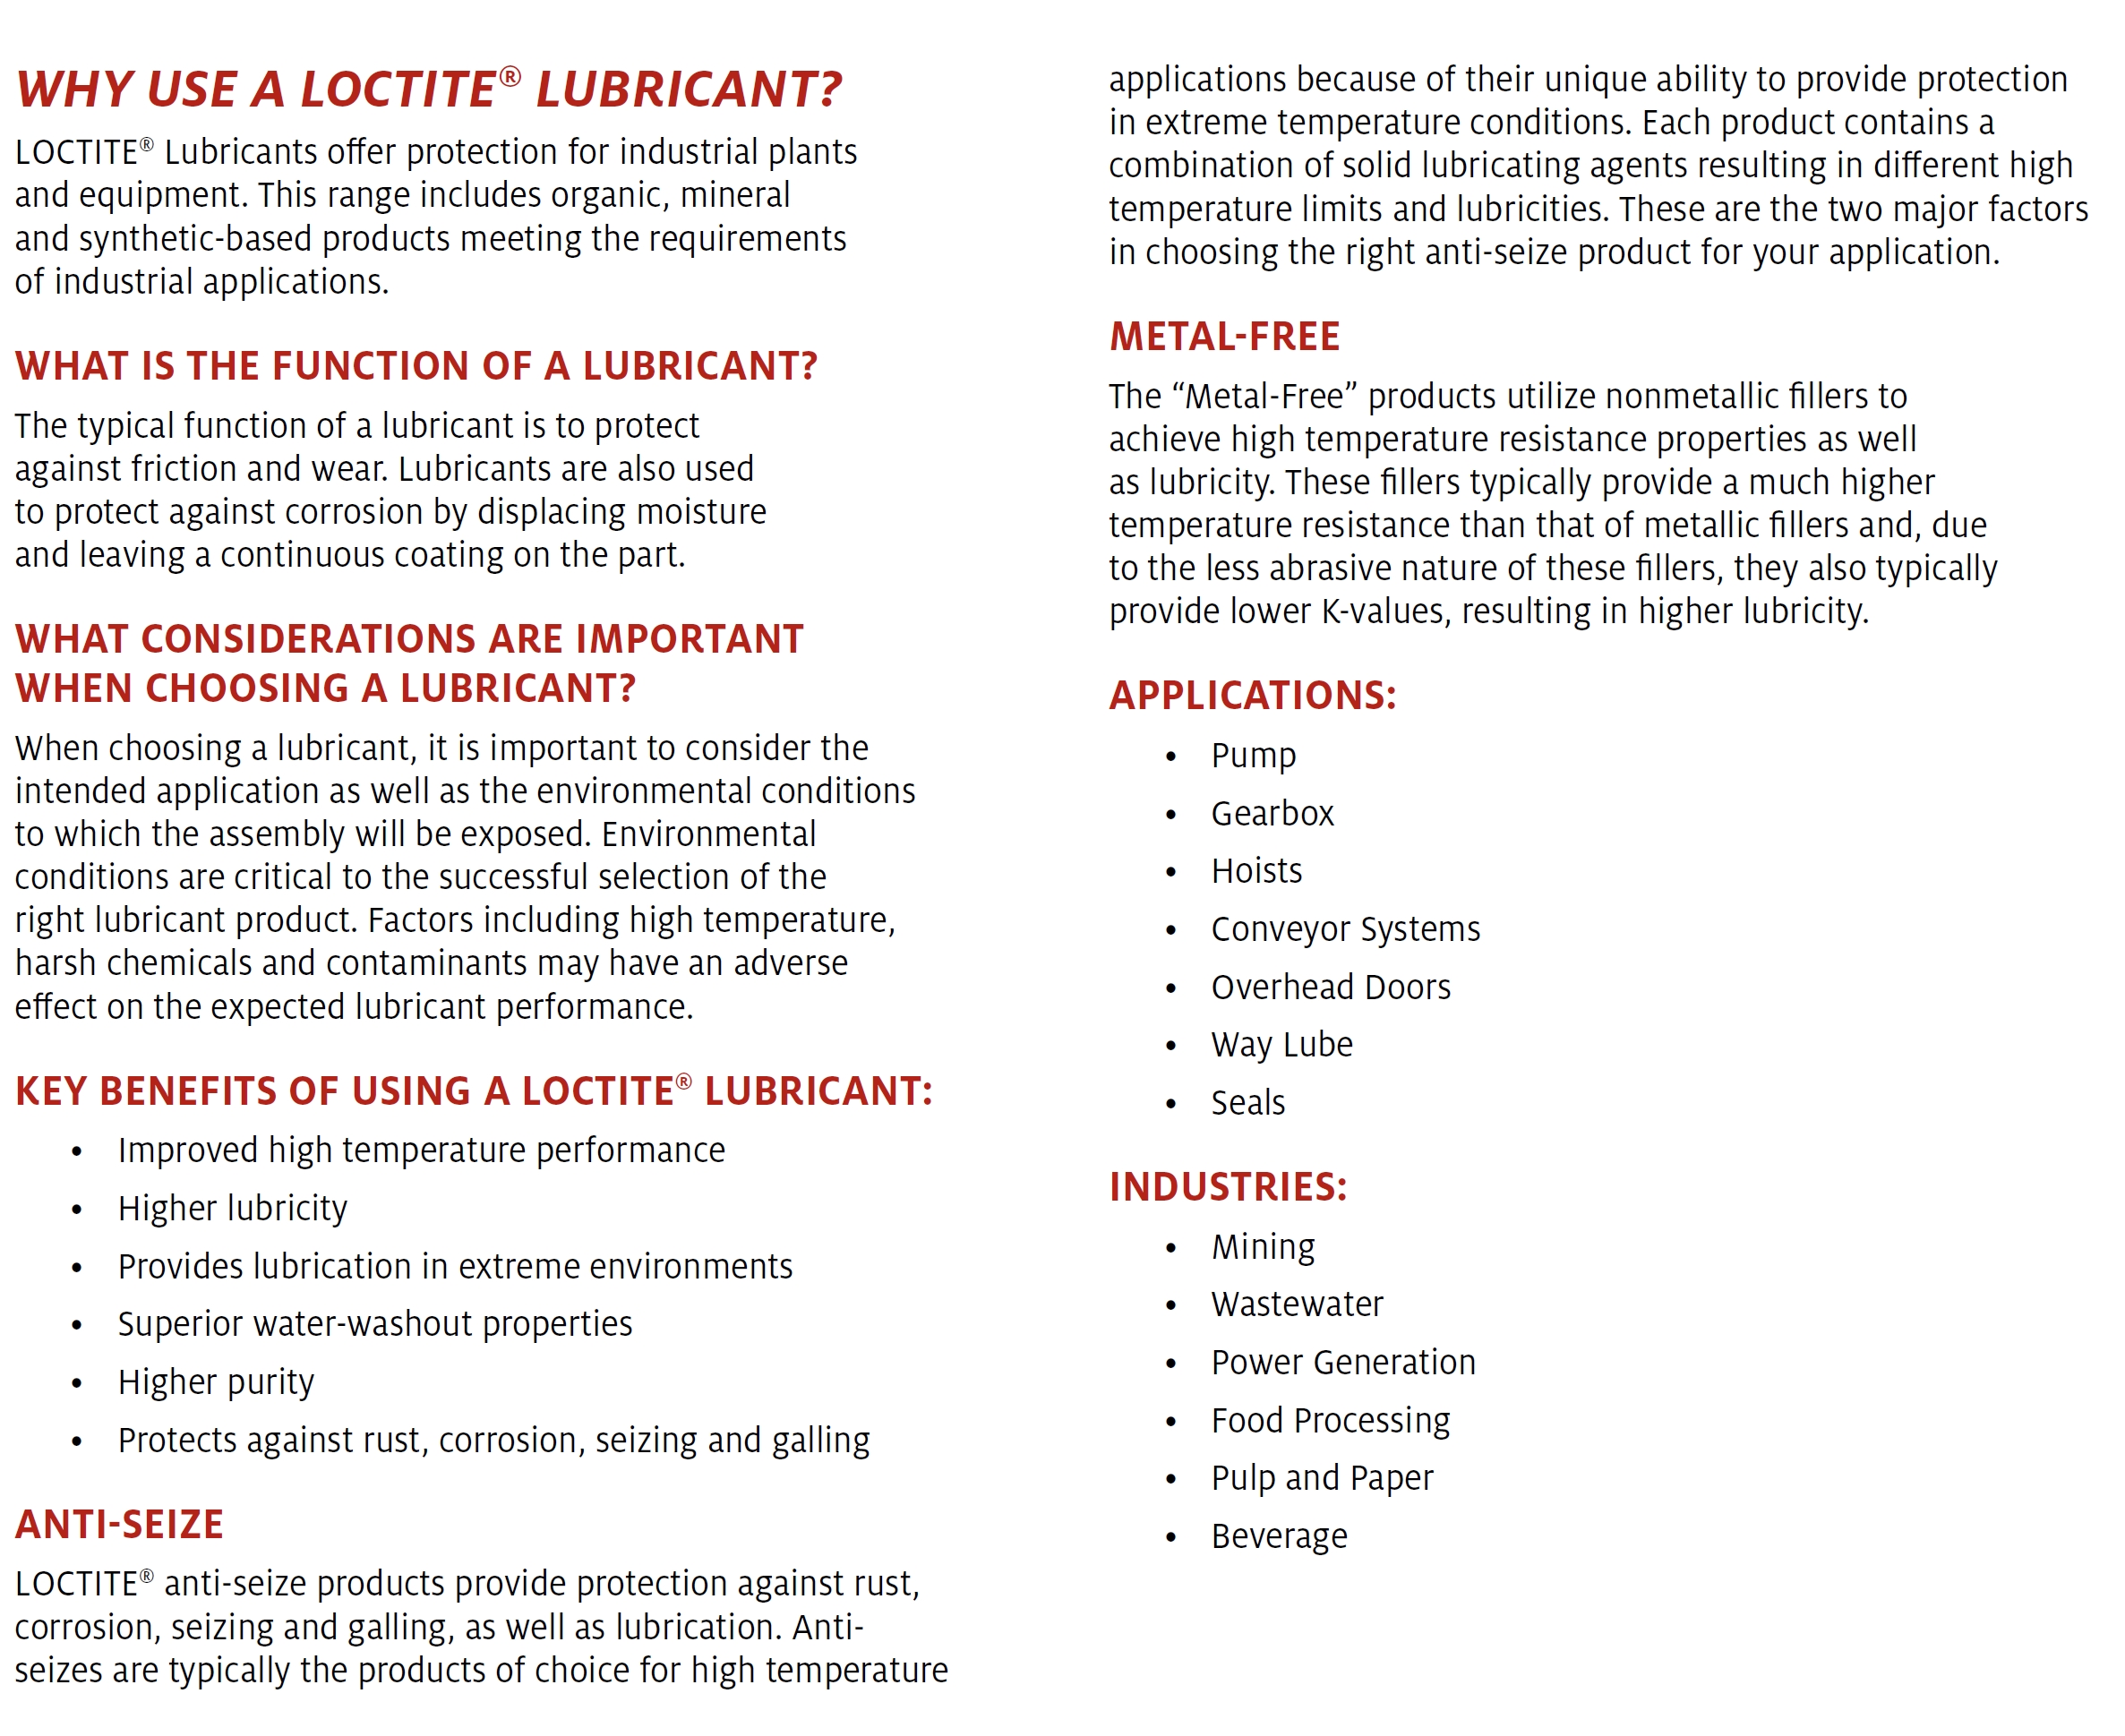 Loctite Anti-Seize Lubricants, LB8150, LB771, LB8008, LB8009